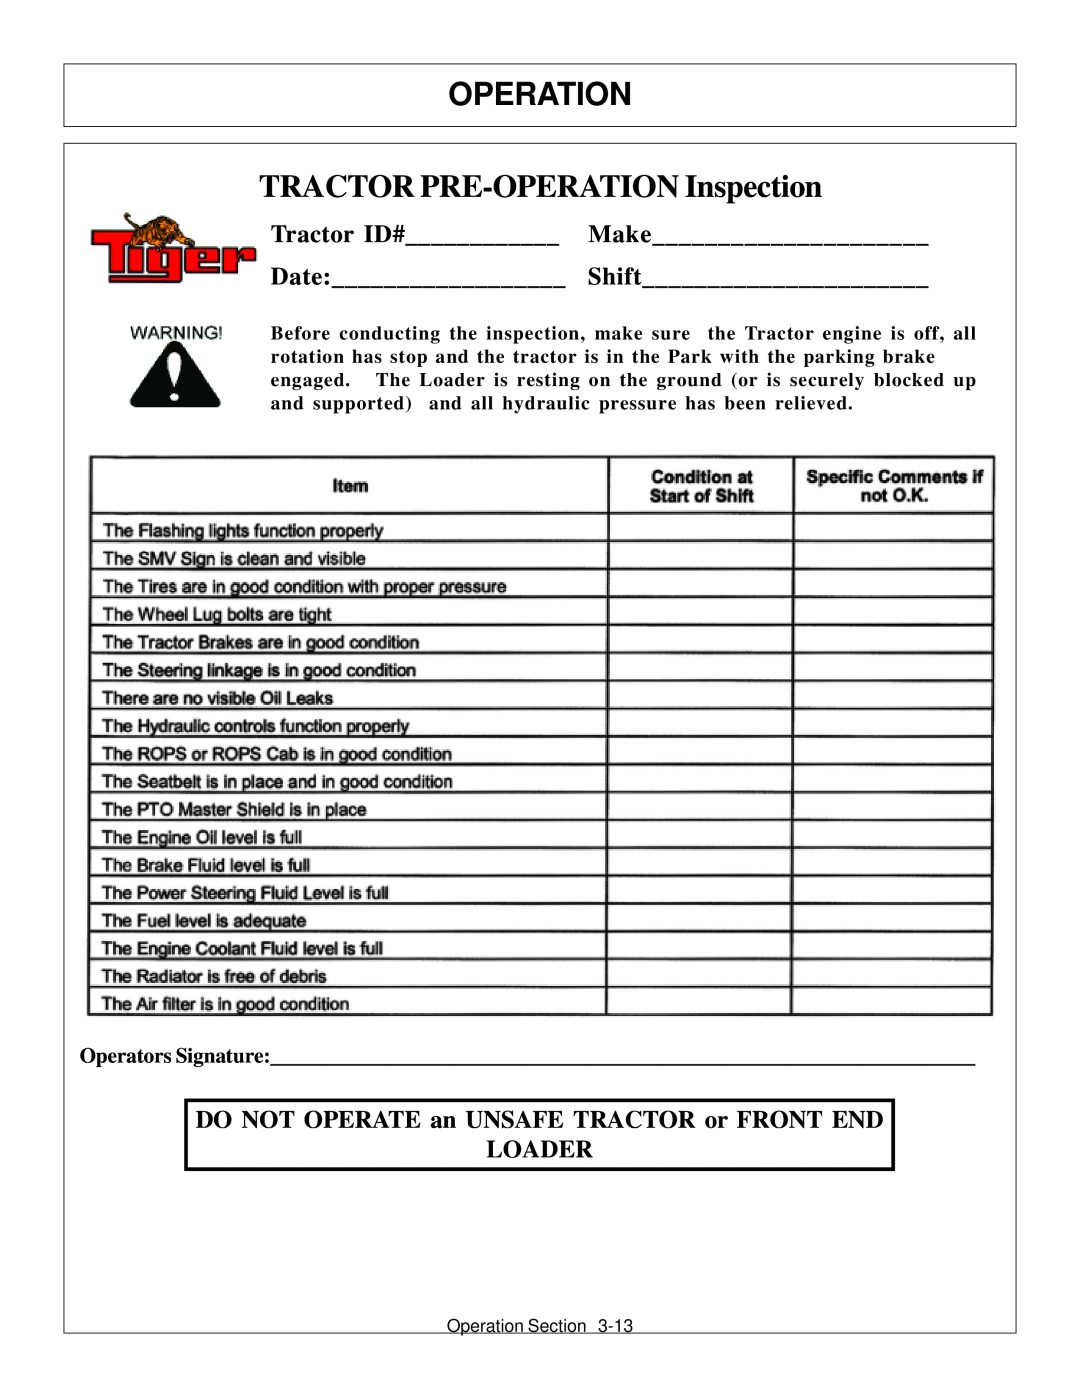 Tiger Products Co., Ltd JD 72-7520 manual Operation, TRACTOR PRE-OPERATION Inspection, Tractor ID# Make Date Shift 